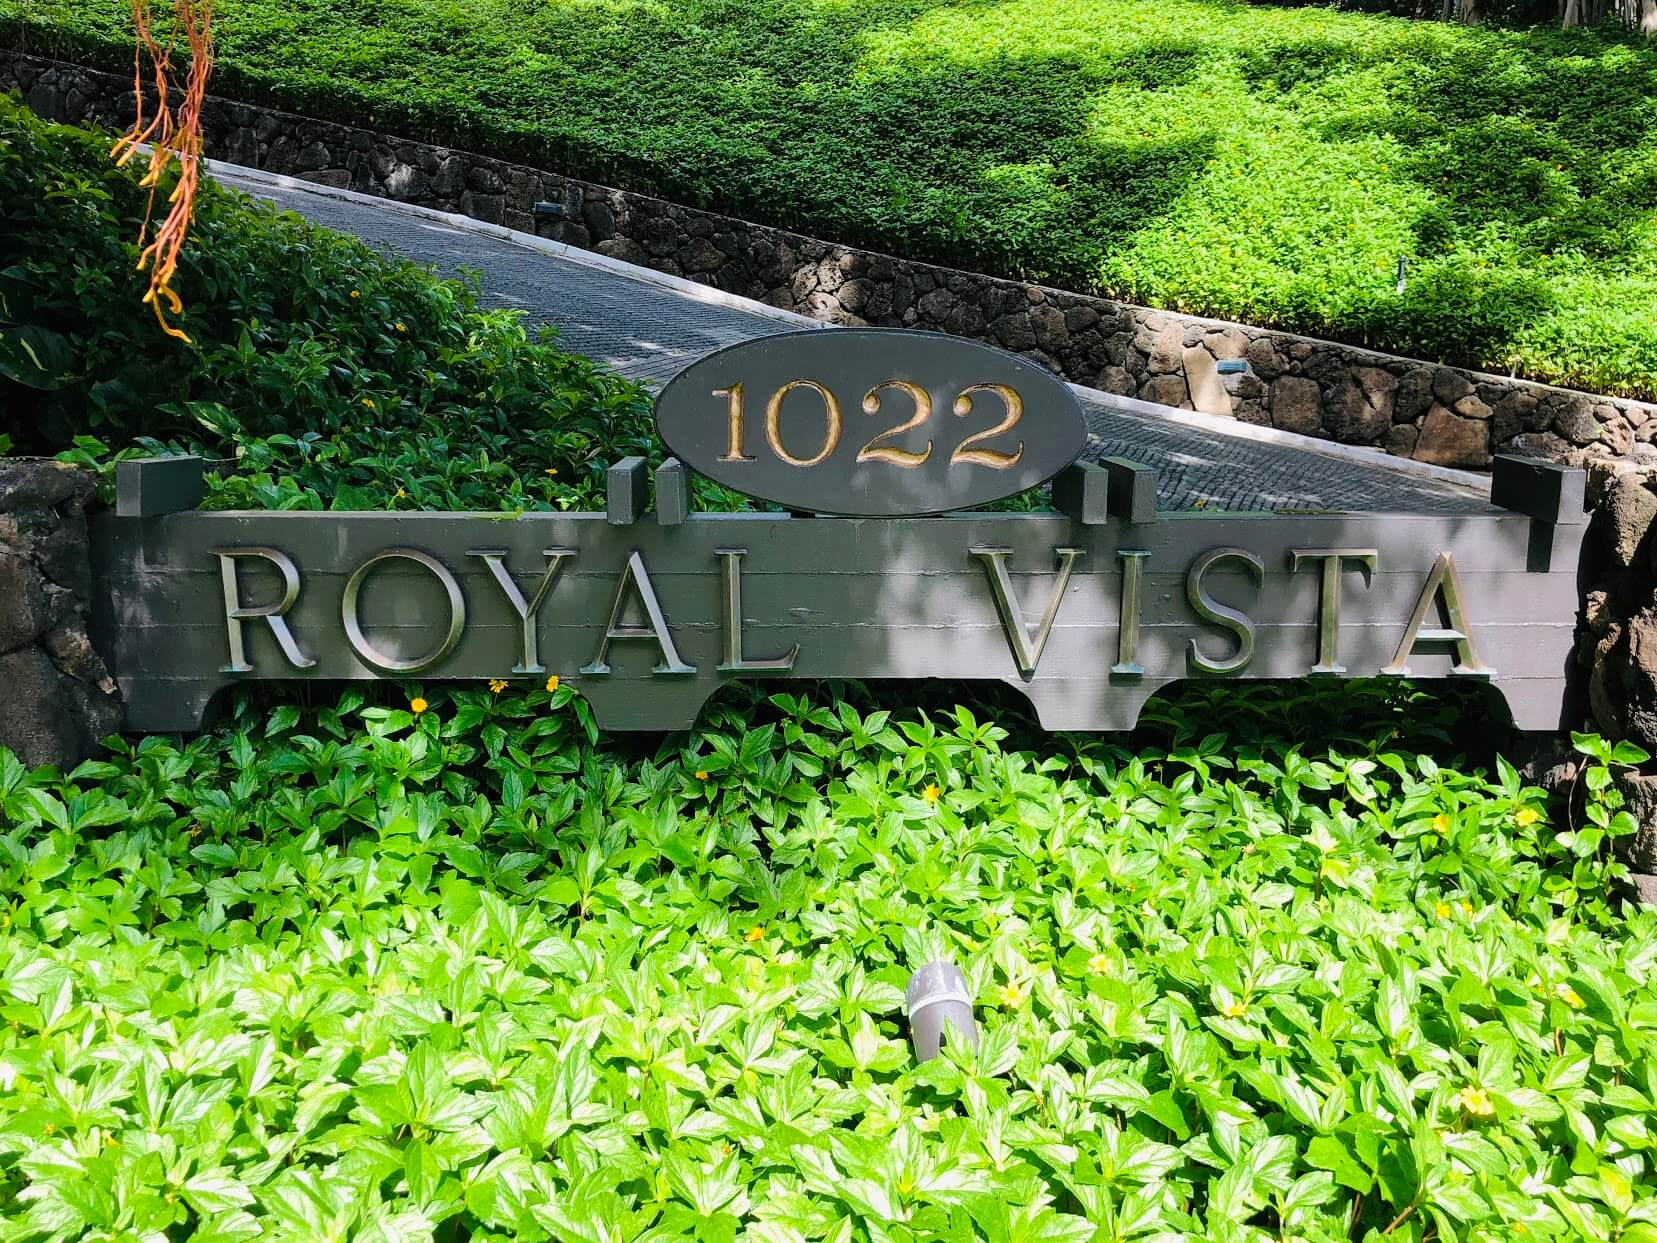 Royal Vistaの看板